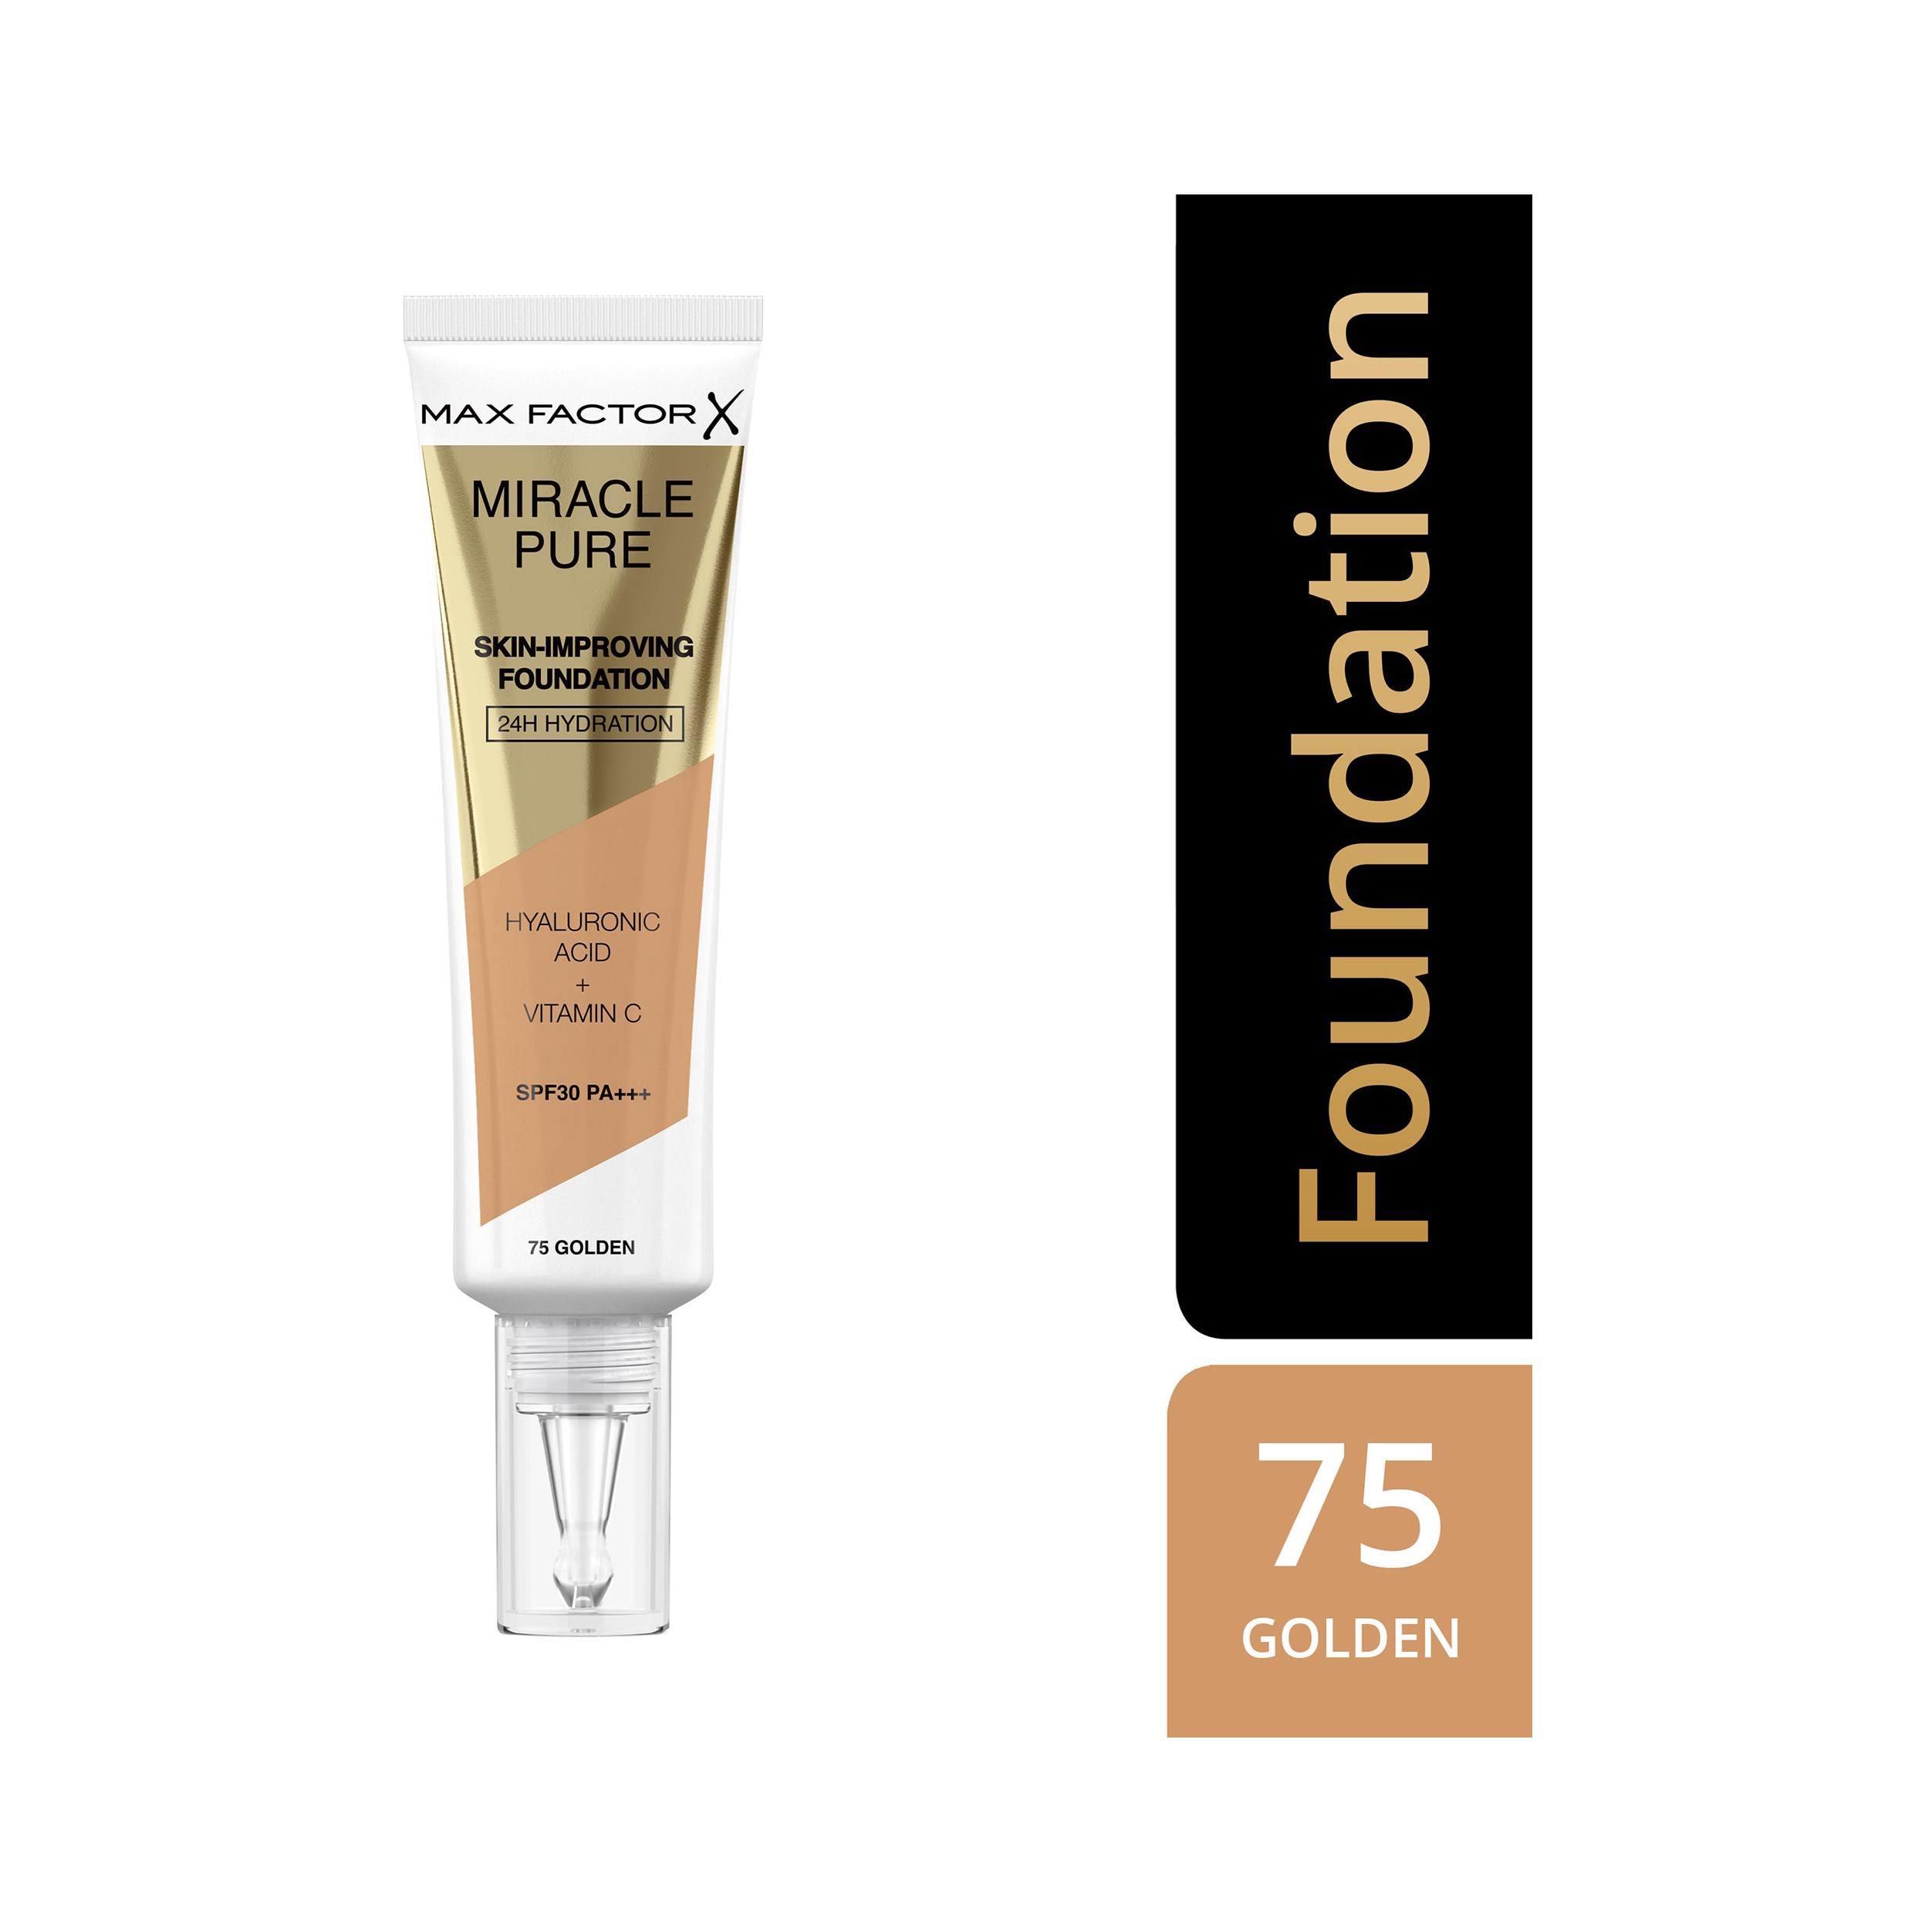 Läs mer om Max Factor Miracle Pure Skin-Improving Foundation 75 Golden